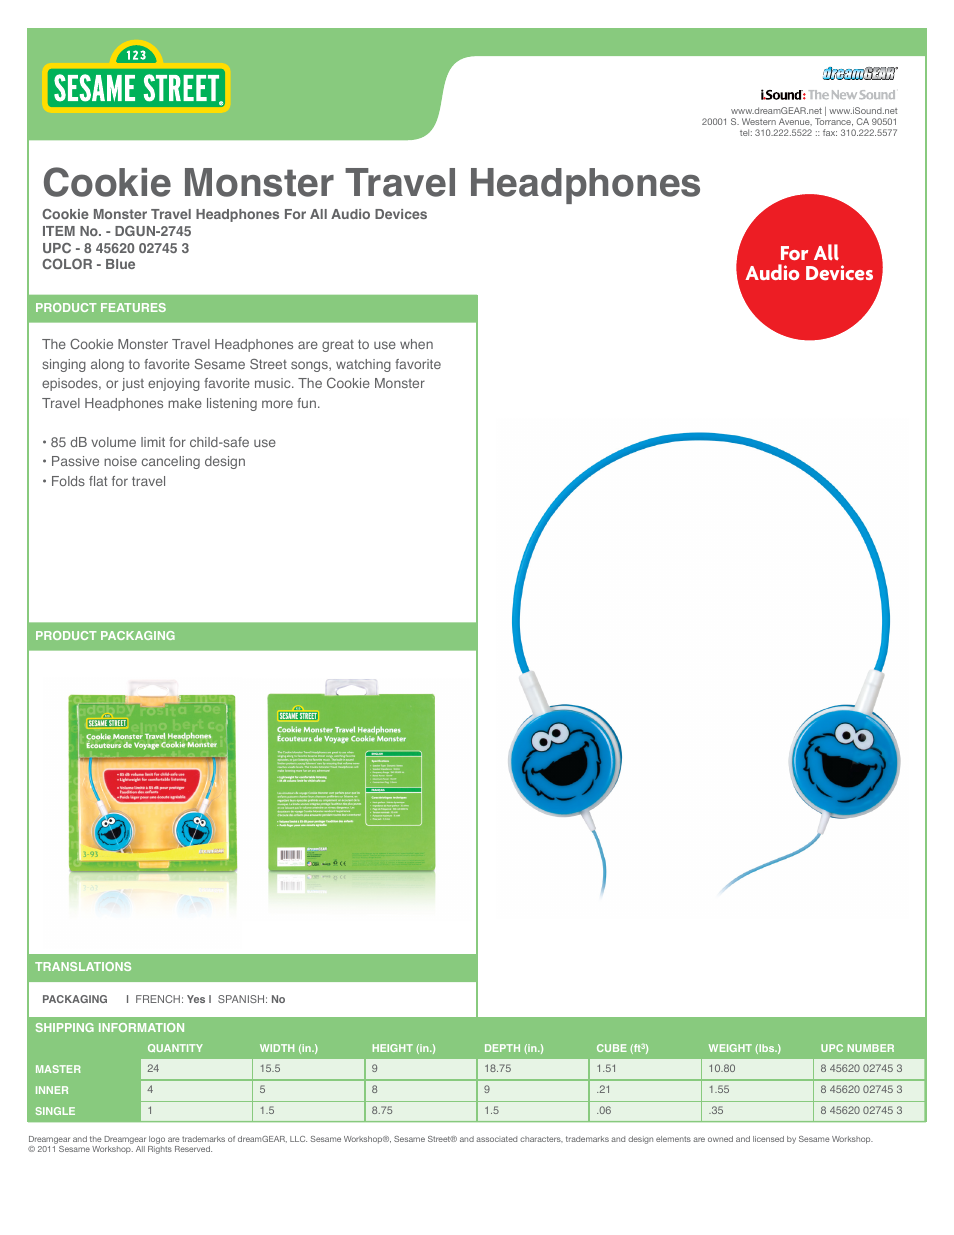 Cookie Monster Travel Headphones - Sell Sheet